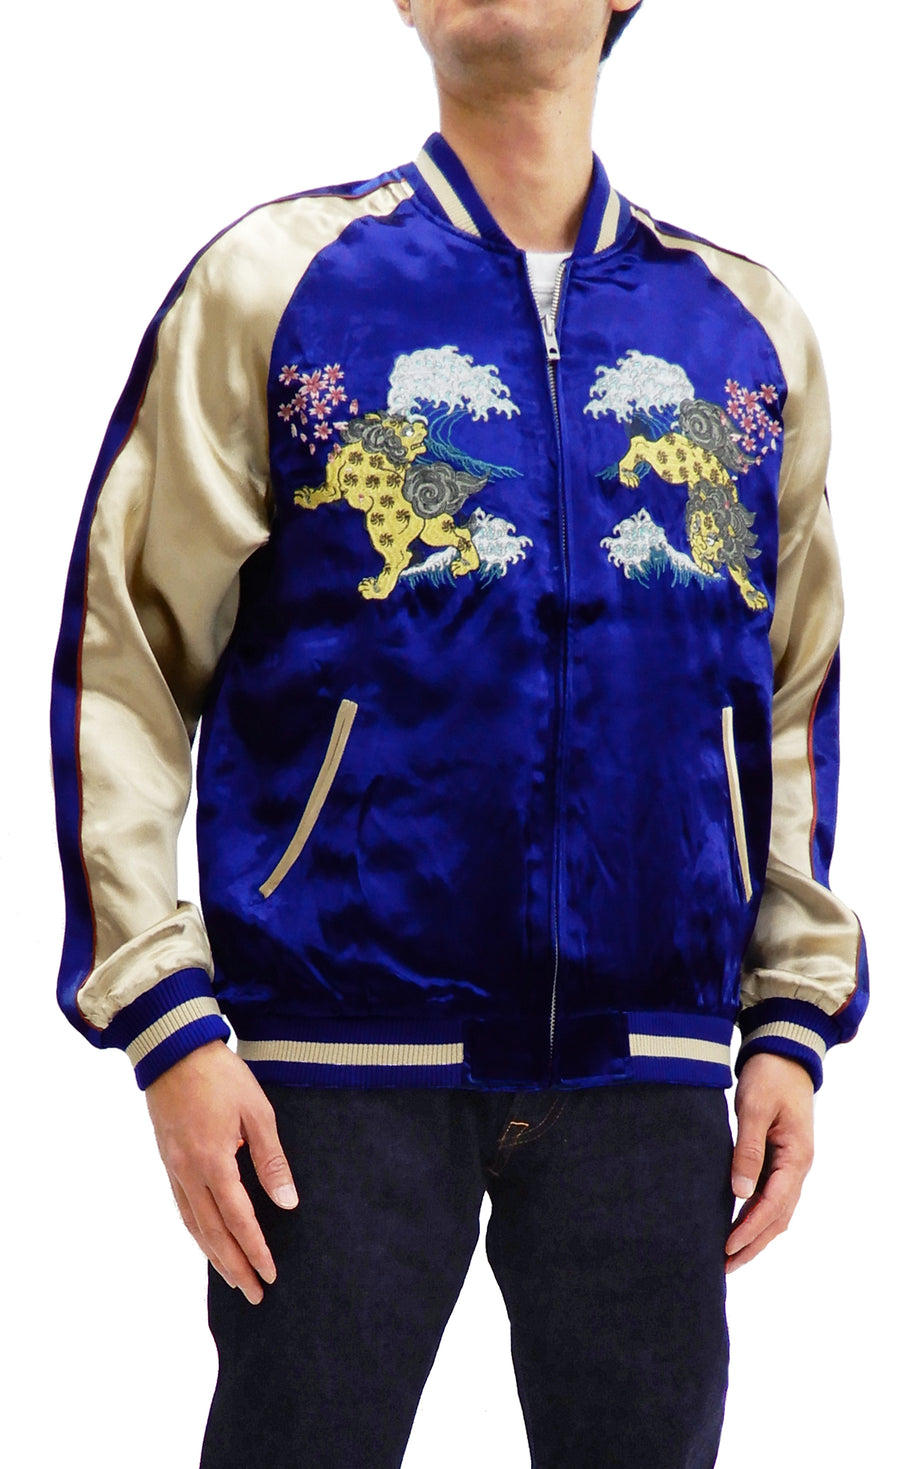 Japanesque Men's Japanese Souvenir Jacket Komainu Embroidered